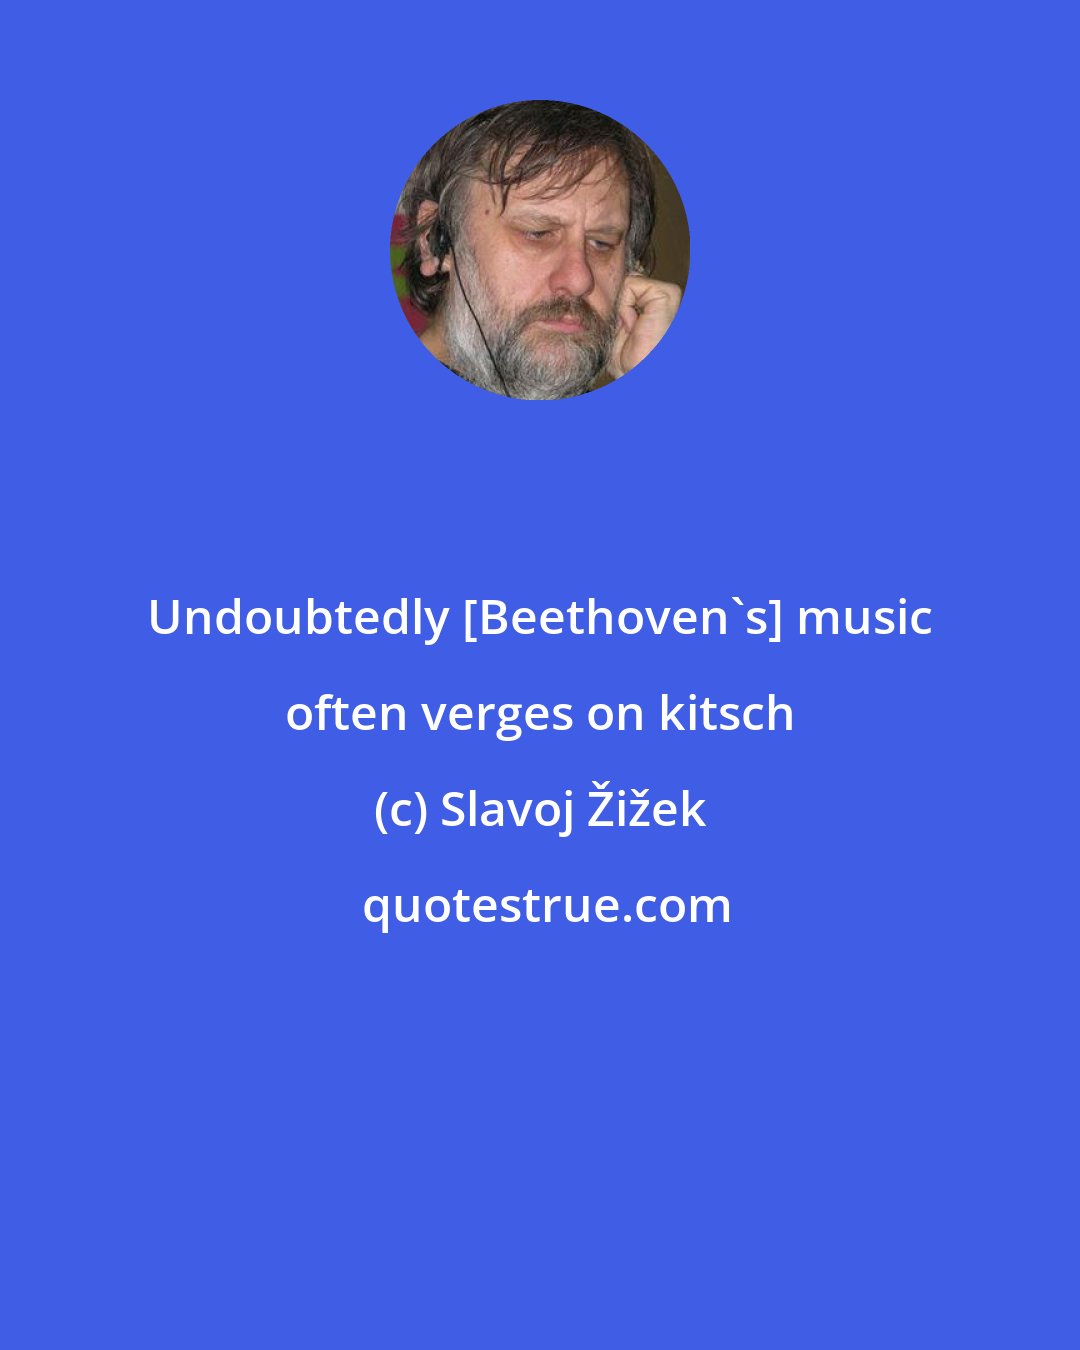 Slavoj Žižek: Undoubtedly [Beethoven's] music often verges on kitsch